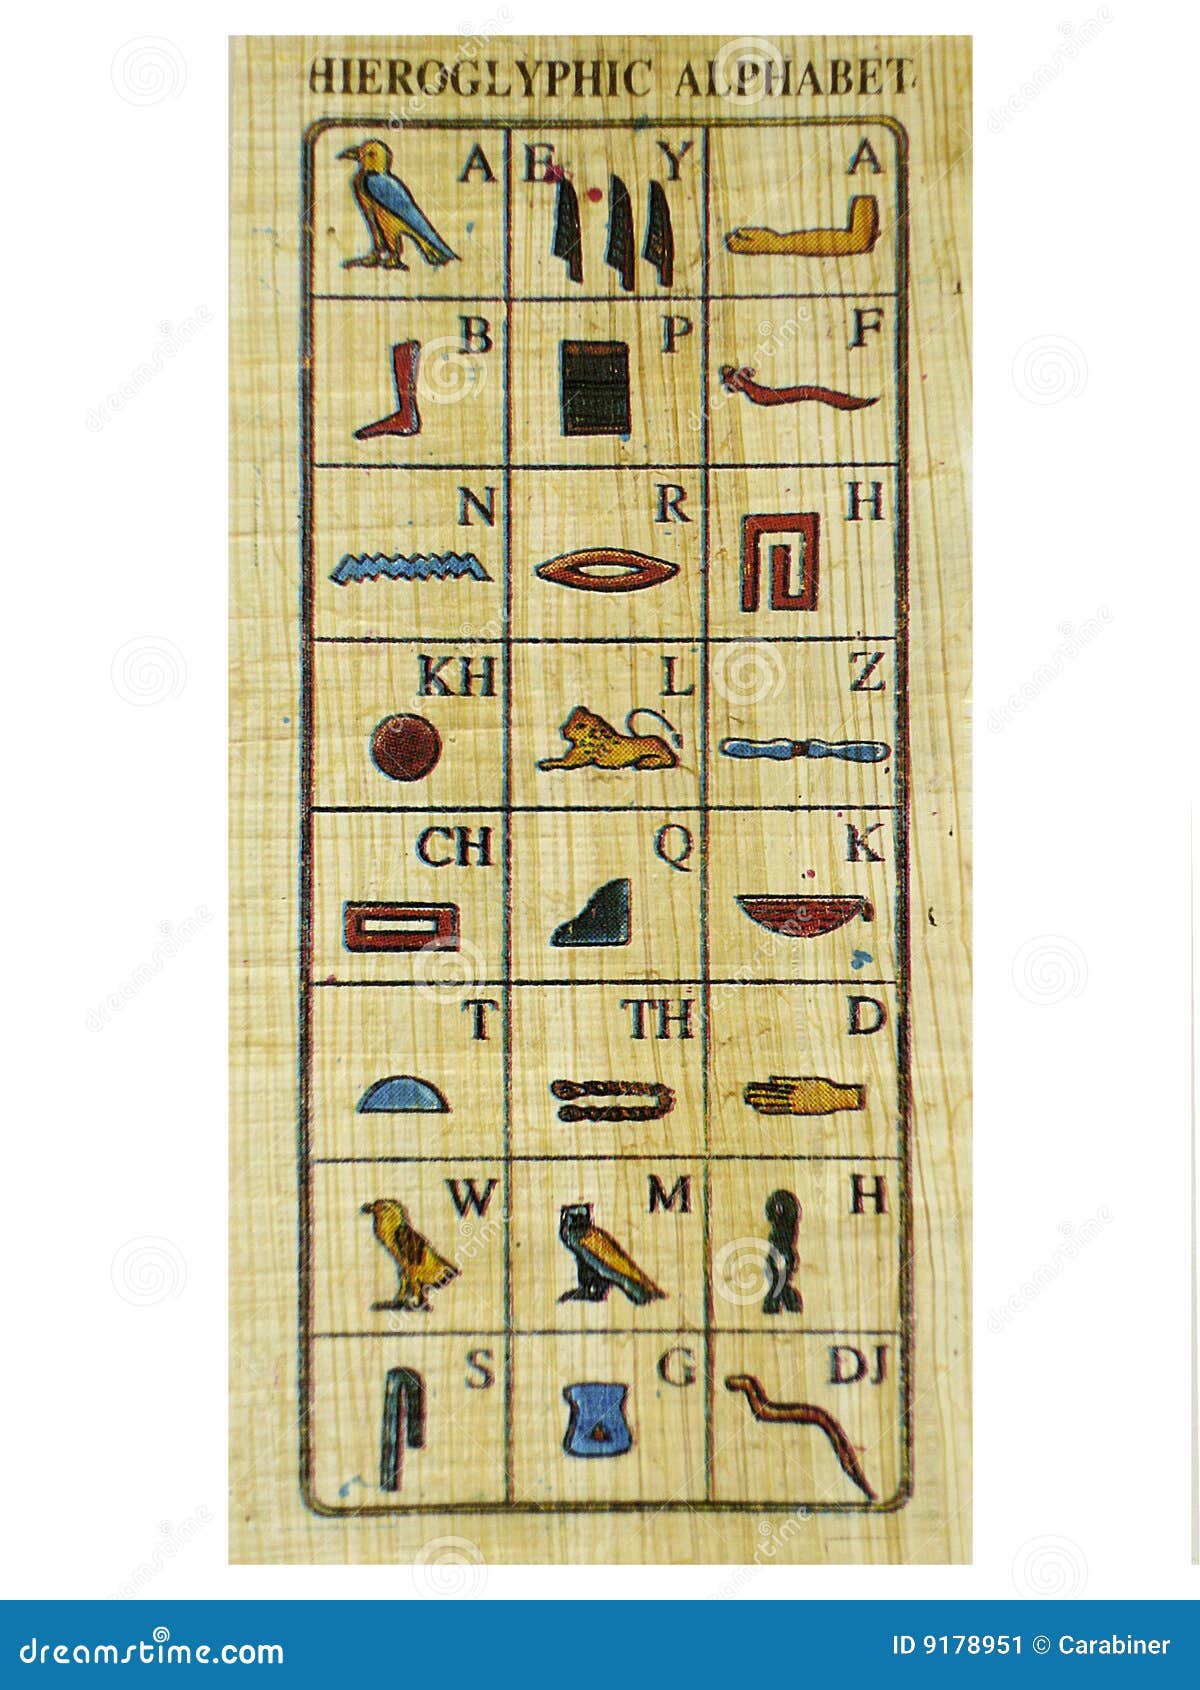 alphabetical papyrus